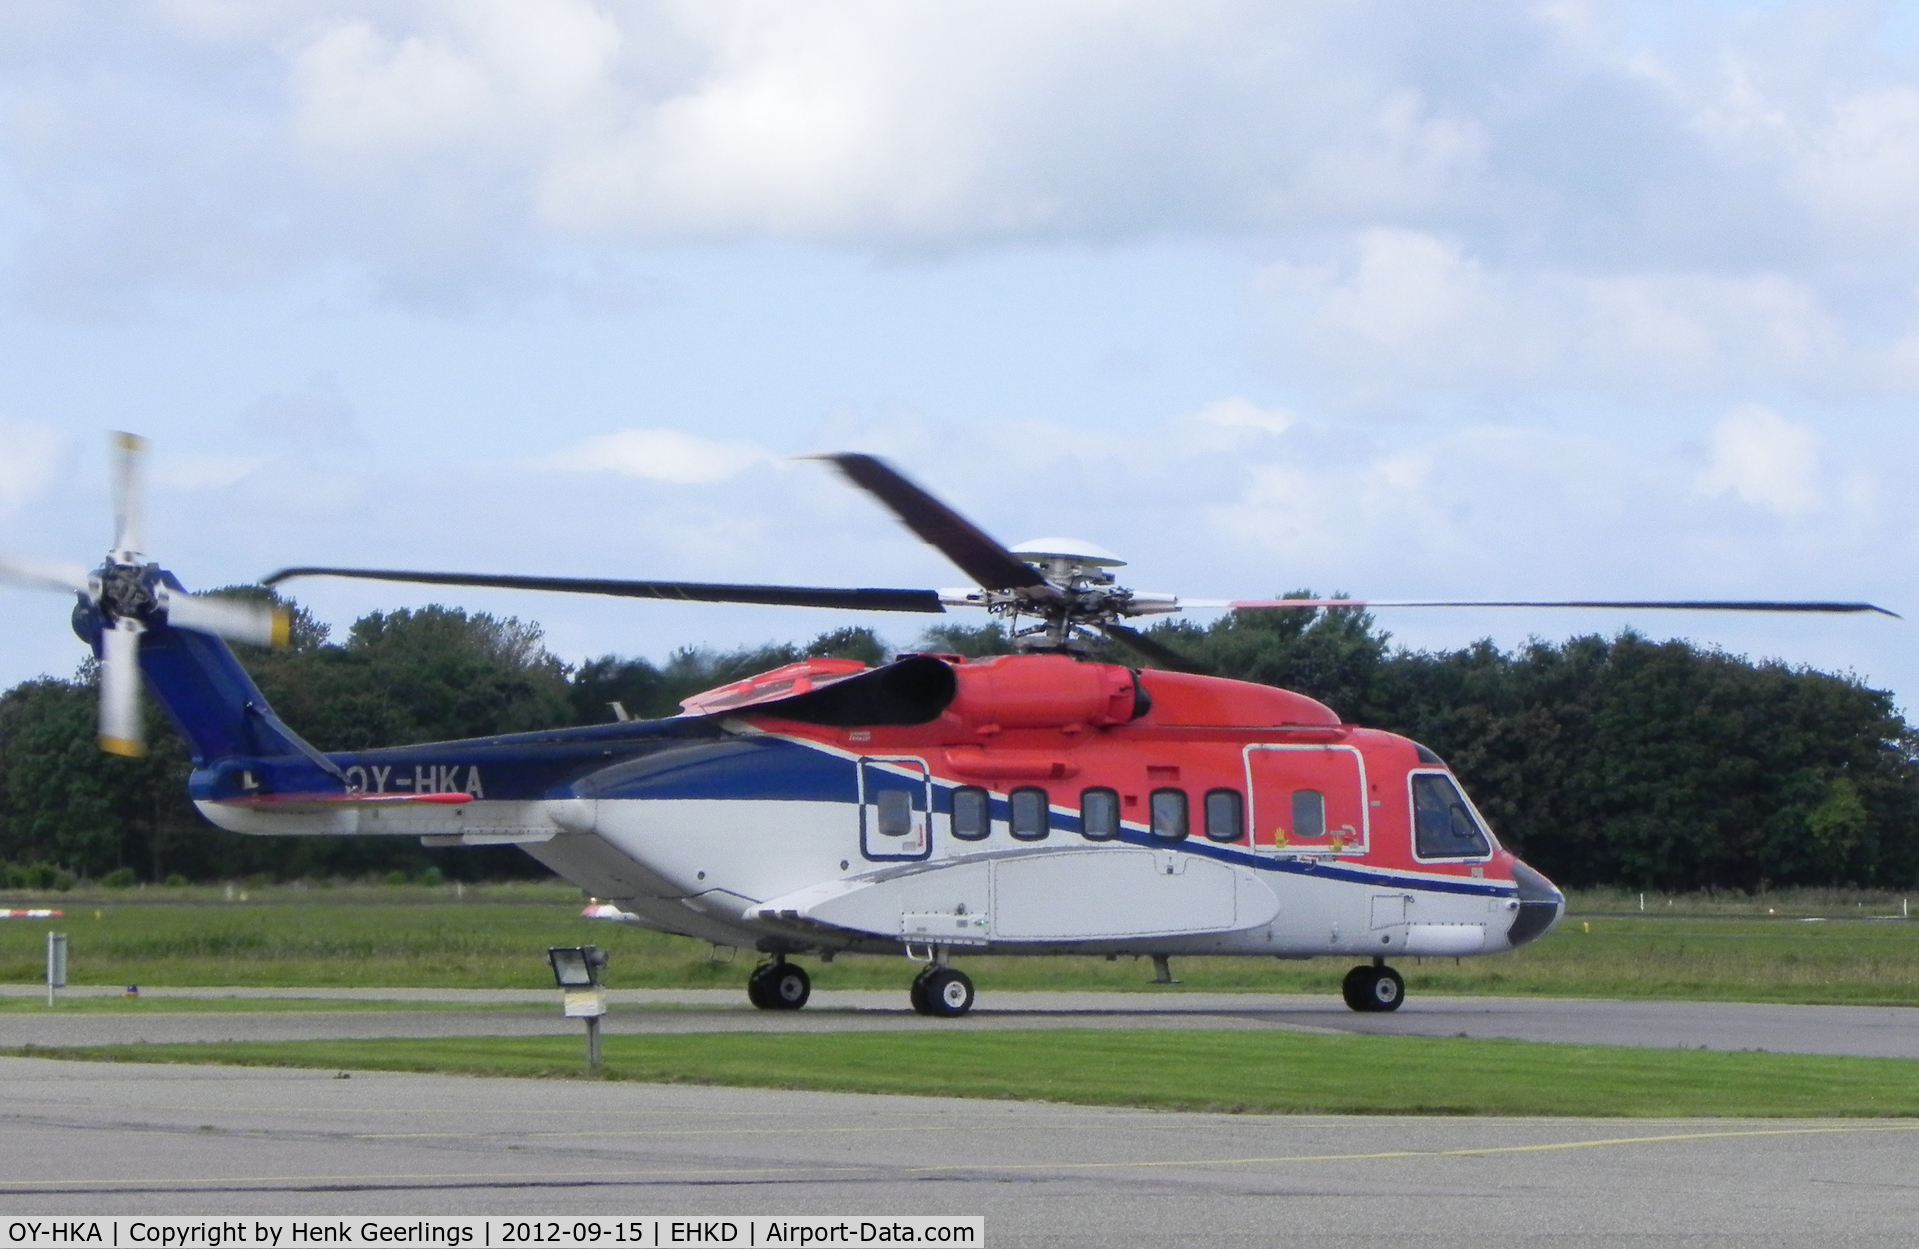 OY-HKA, 2006 Sikorsky S-92A C/N 920046, Heldair Air Show , 15 Sep 2012  at Den Helder Airport 

CHC Denmark